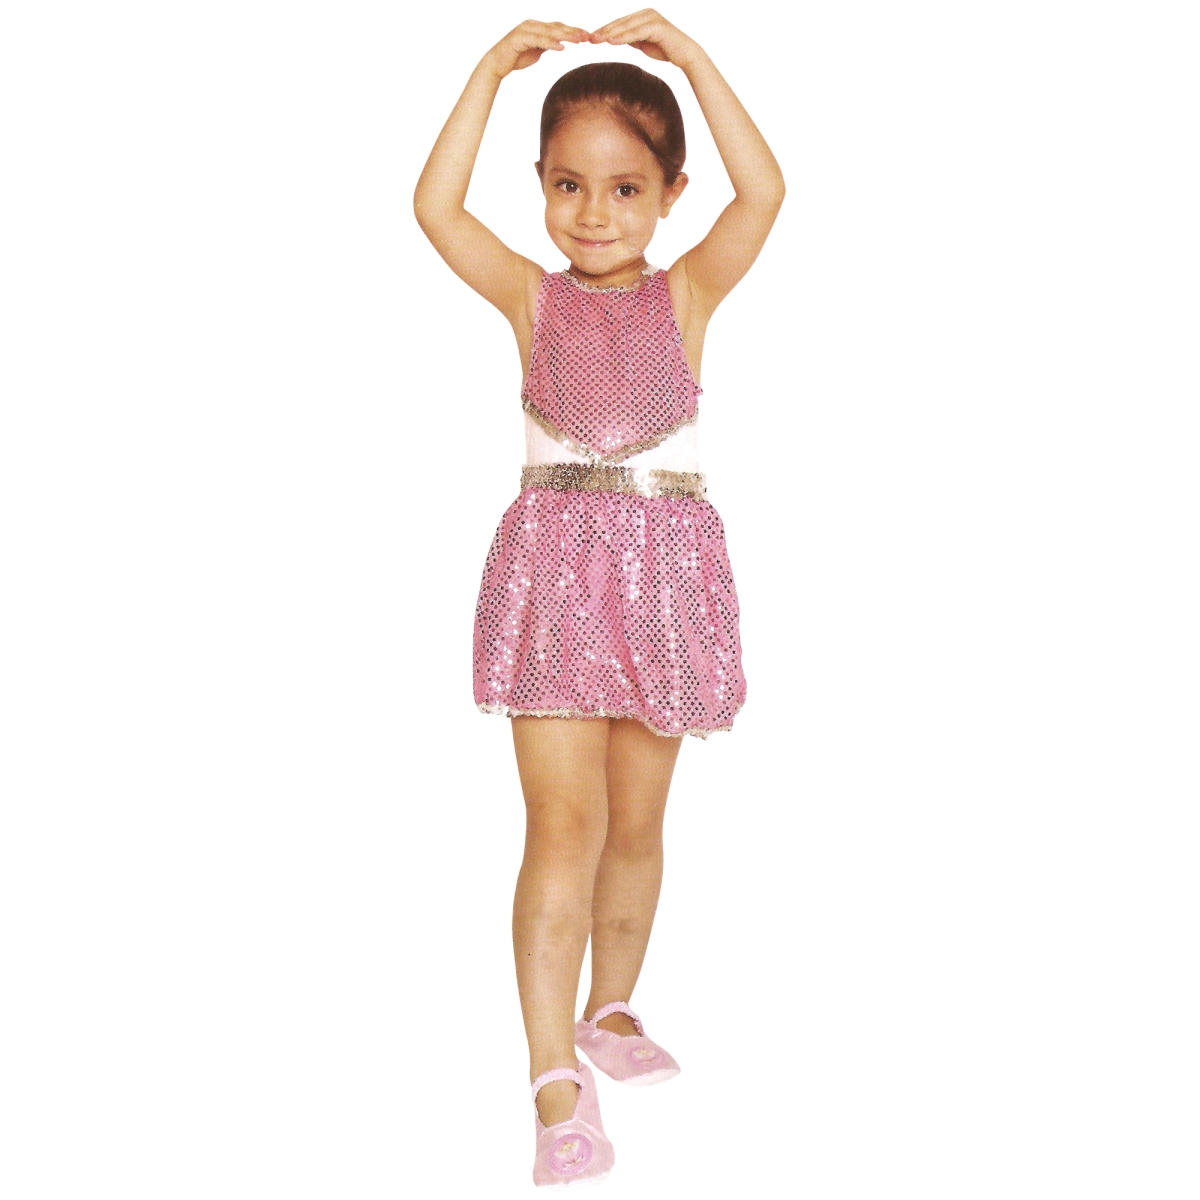 Picture of Northlight 34098913 Pink & White Ballerina Leotard Girl Child Halloween Costume - Medium